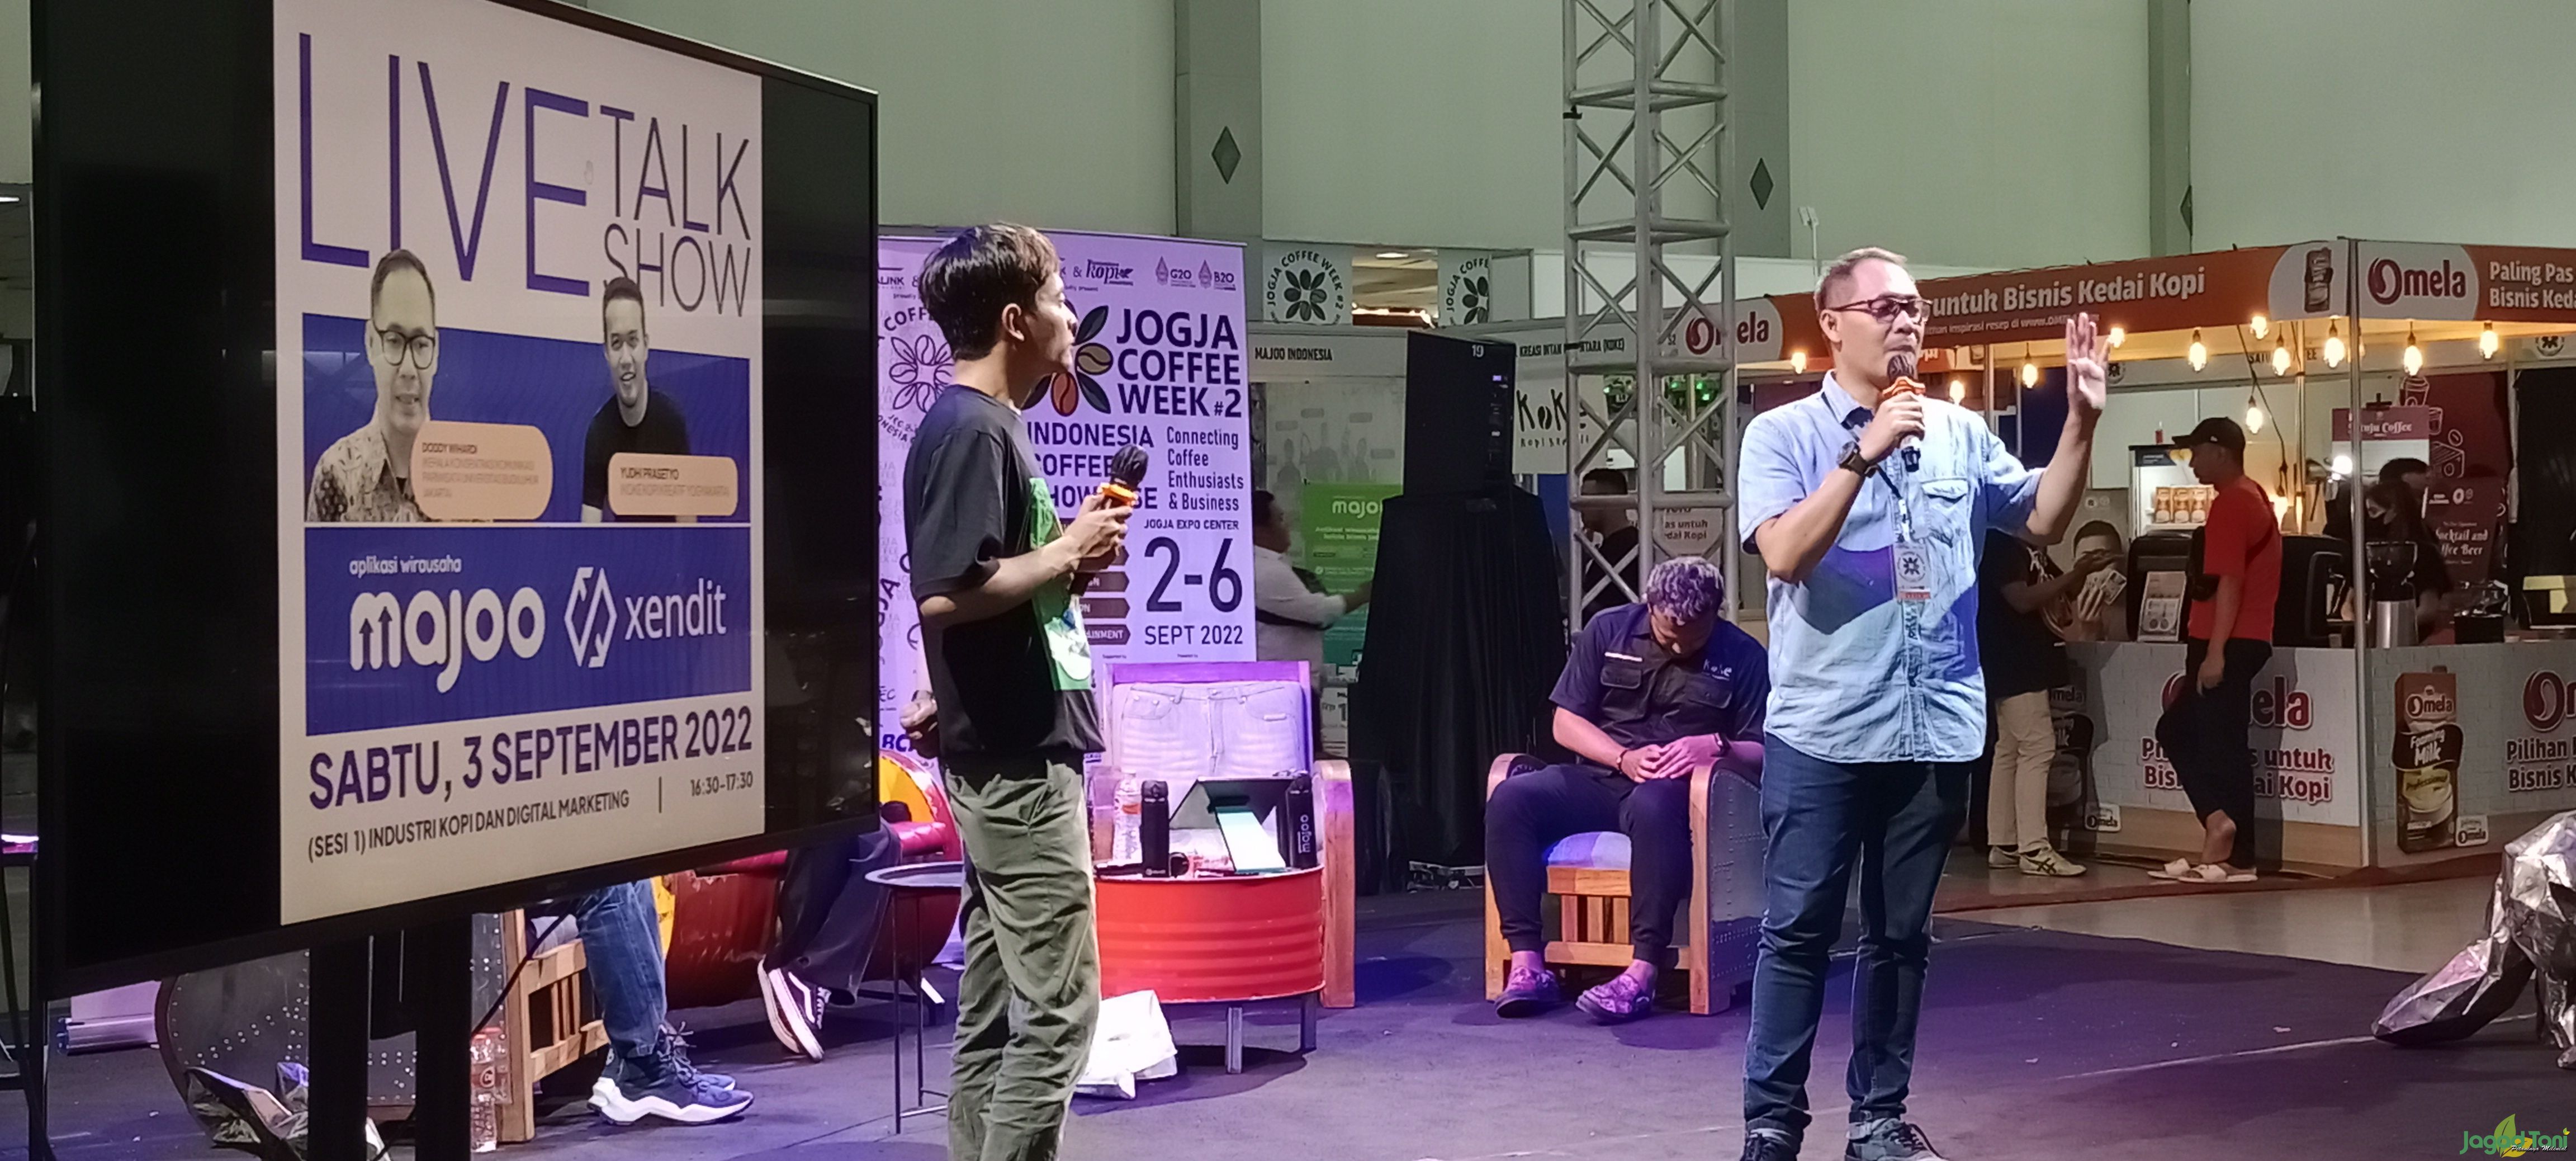 Talkshow Kopi Industri dan Digital Marketing pada gelaran Jogja Coffee Week #2 di Jogja Expo Center 